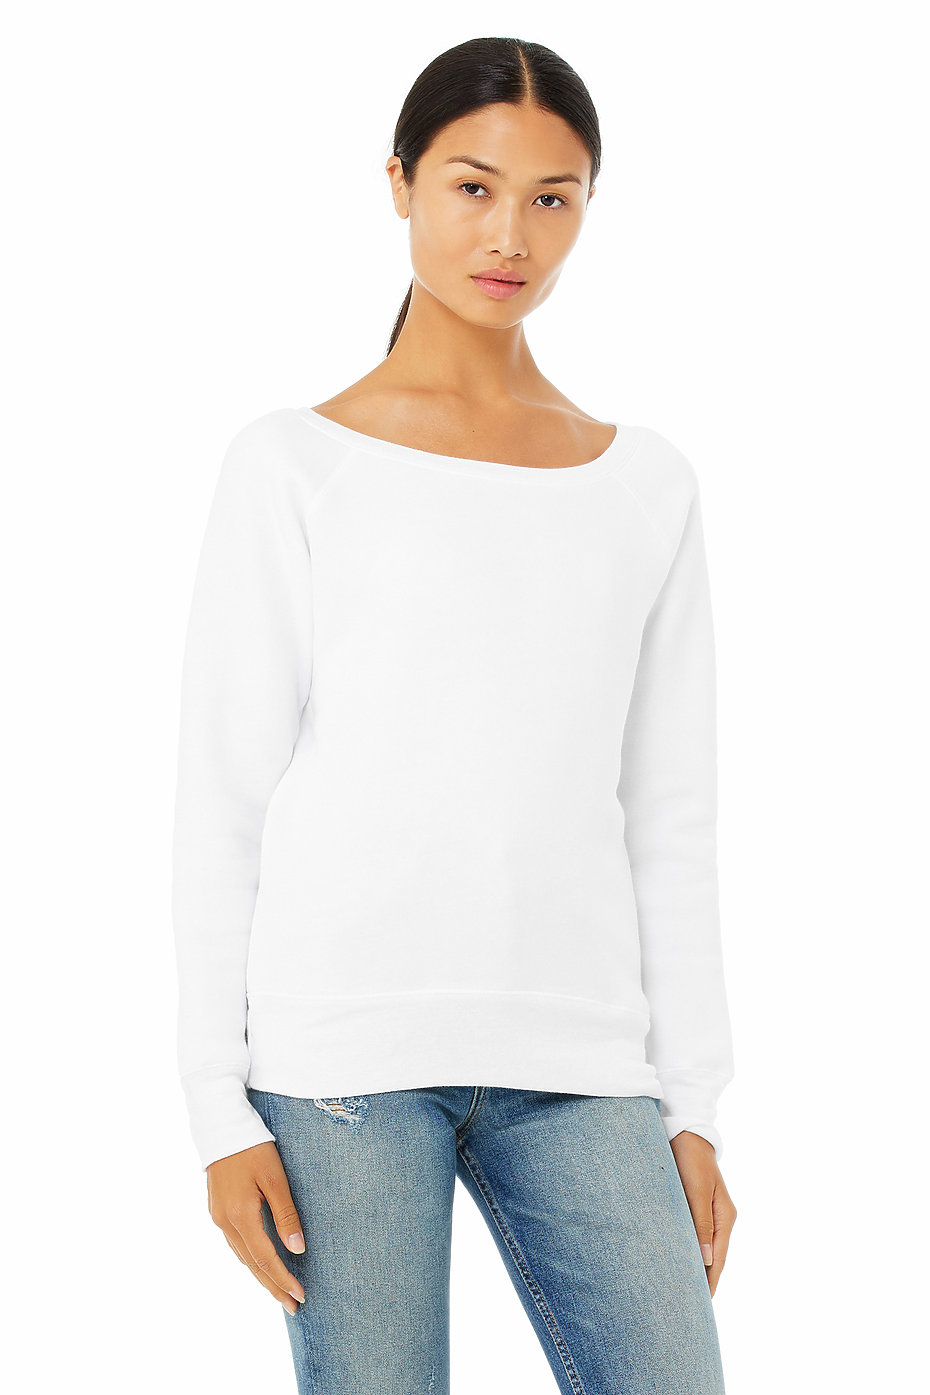 Blue S WOMEN FASHION Jumpers & Sweatshirts NO STYLE Zara sweatshirt discount 76% 